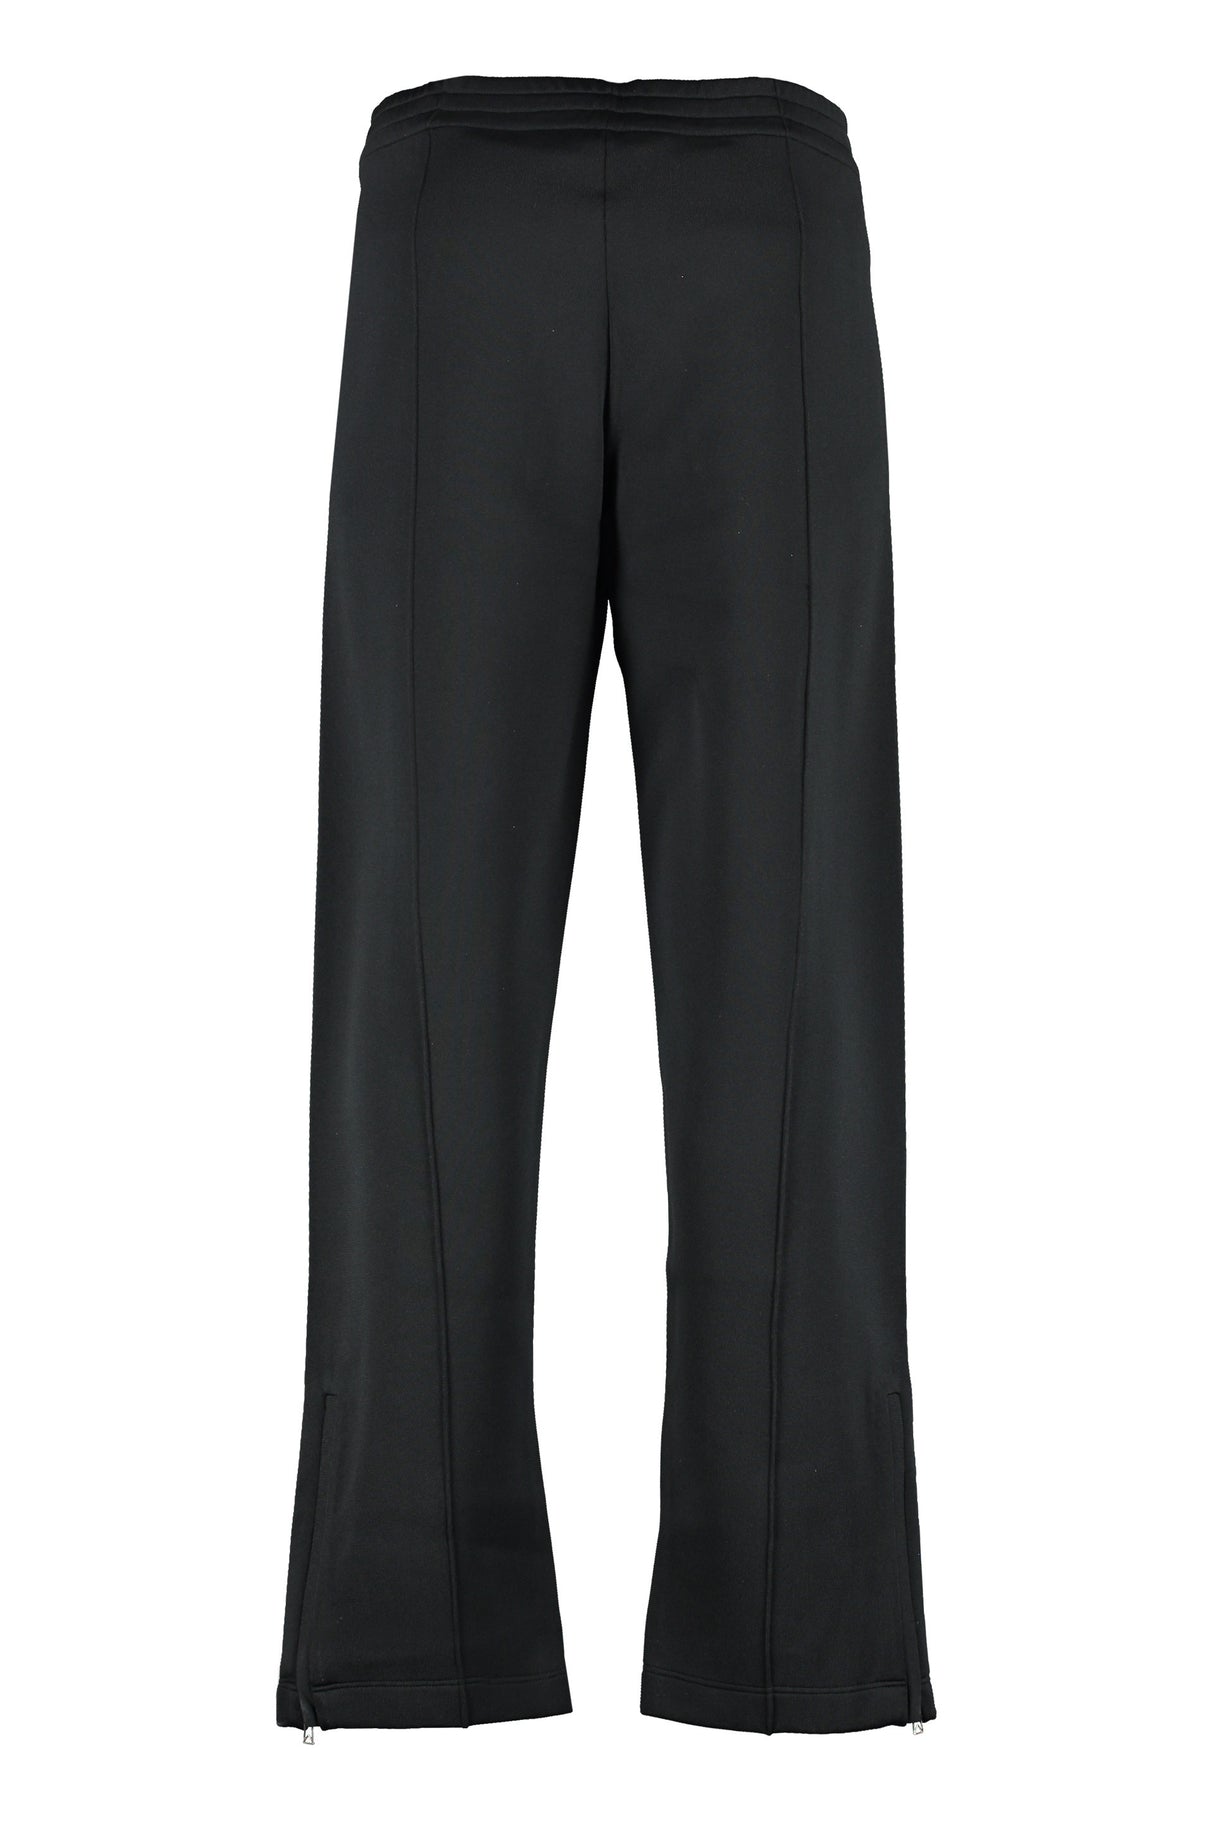 BOTTEGA VENETA Men's Black Technical Fabric Pants with Extendable Side Zipper